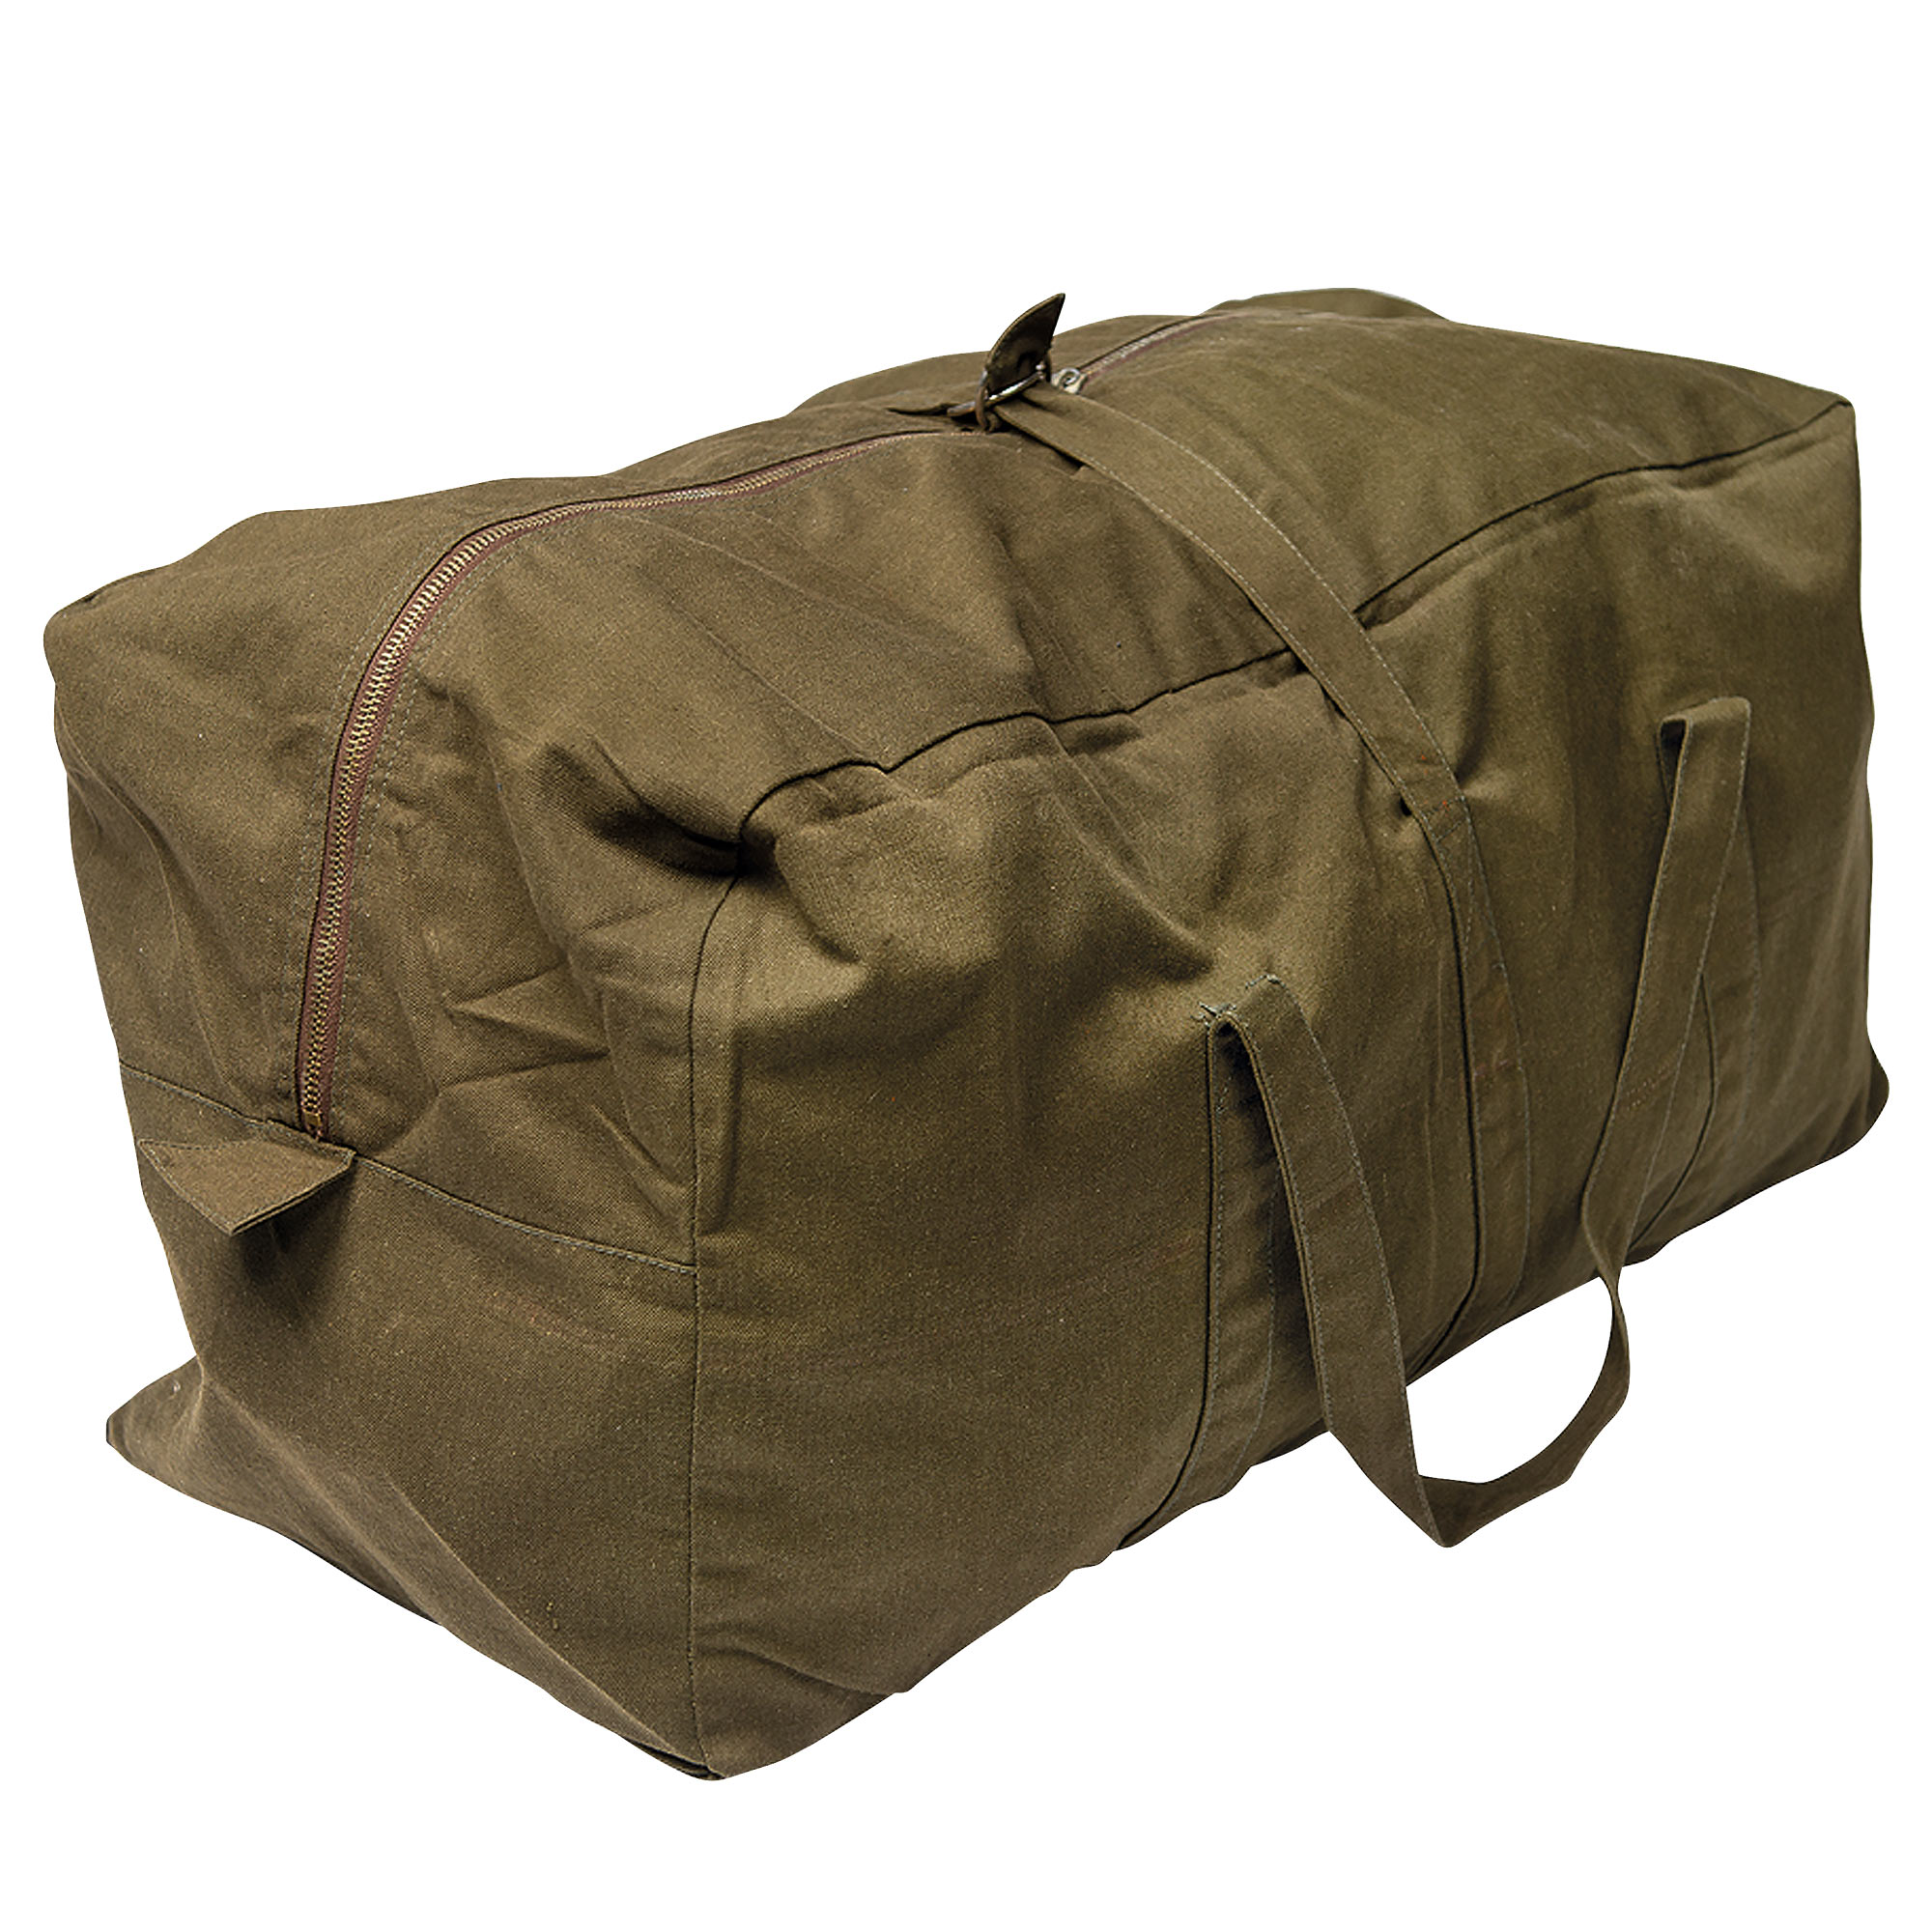 OD green canvas construction Miscellaneous Pilot Bag Military Surplus Zippered